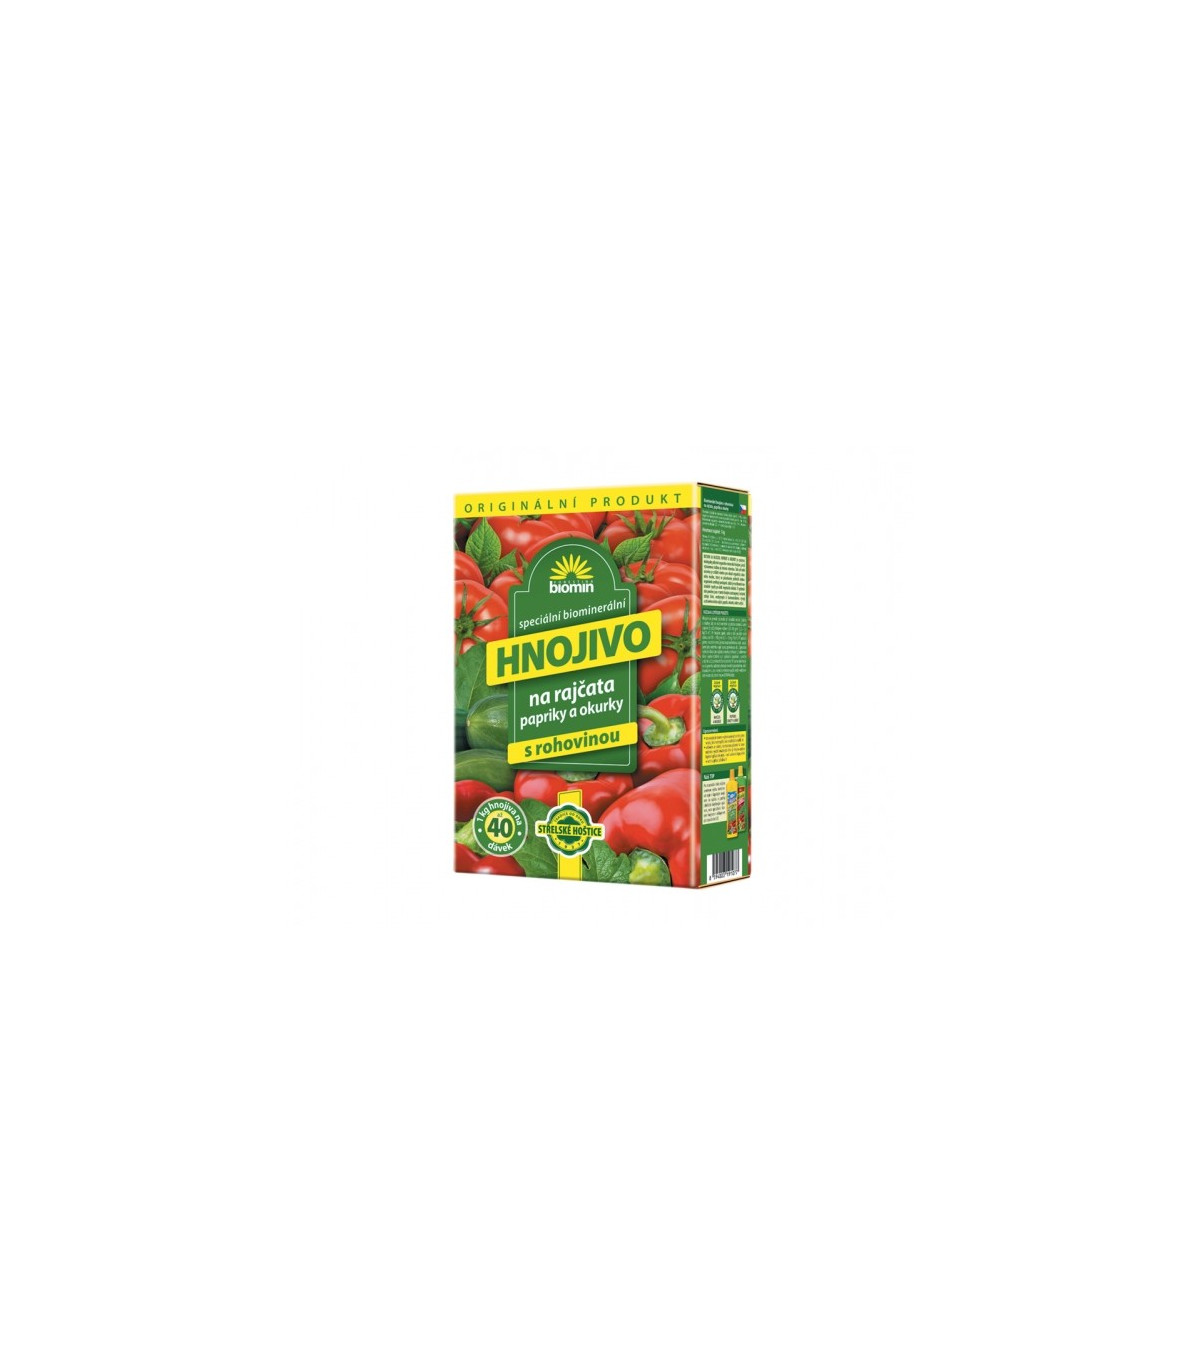 Hnojivo AG Biomin paradajky - predaj hnojiva - 1 kg